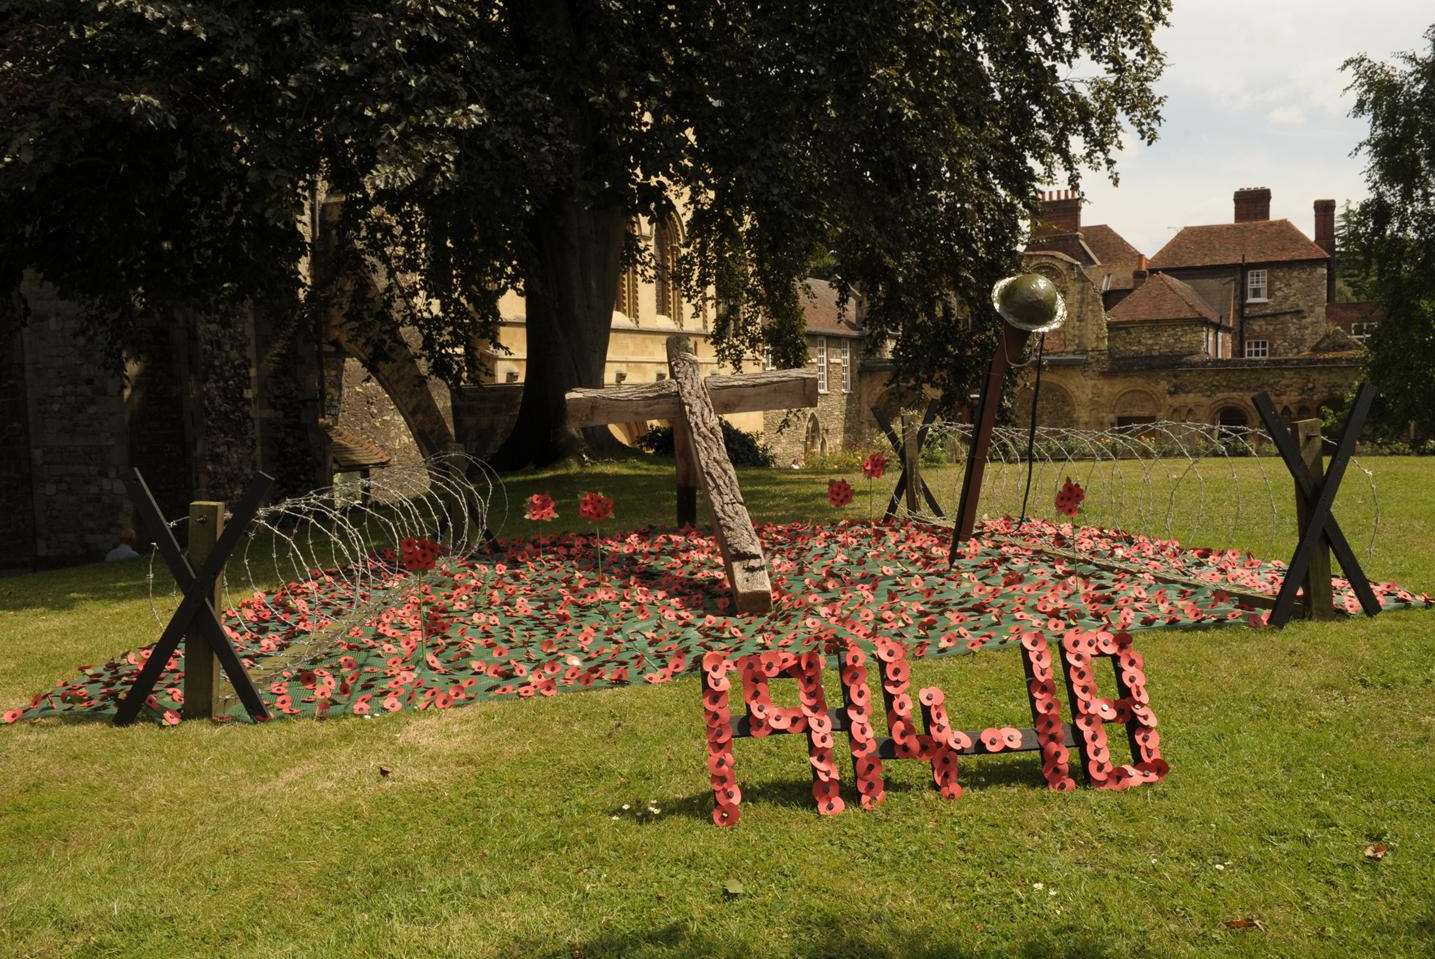 Rochester Cathedral's First World War garden memorial